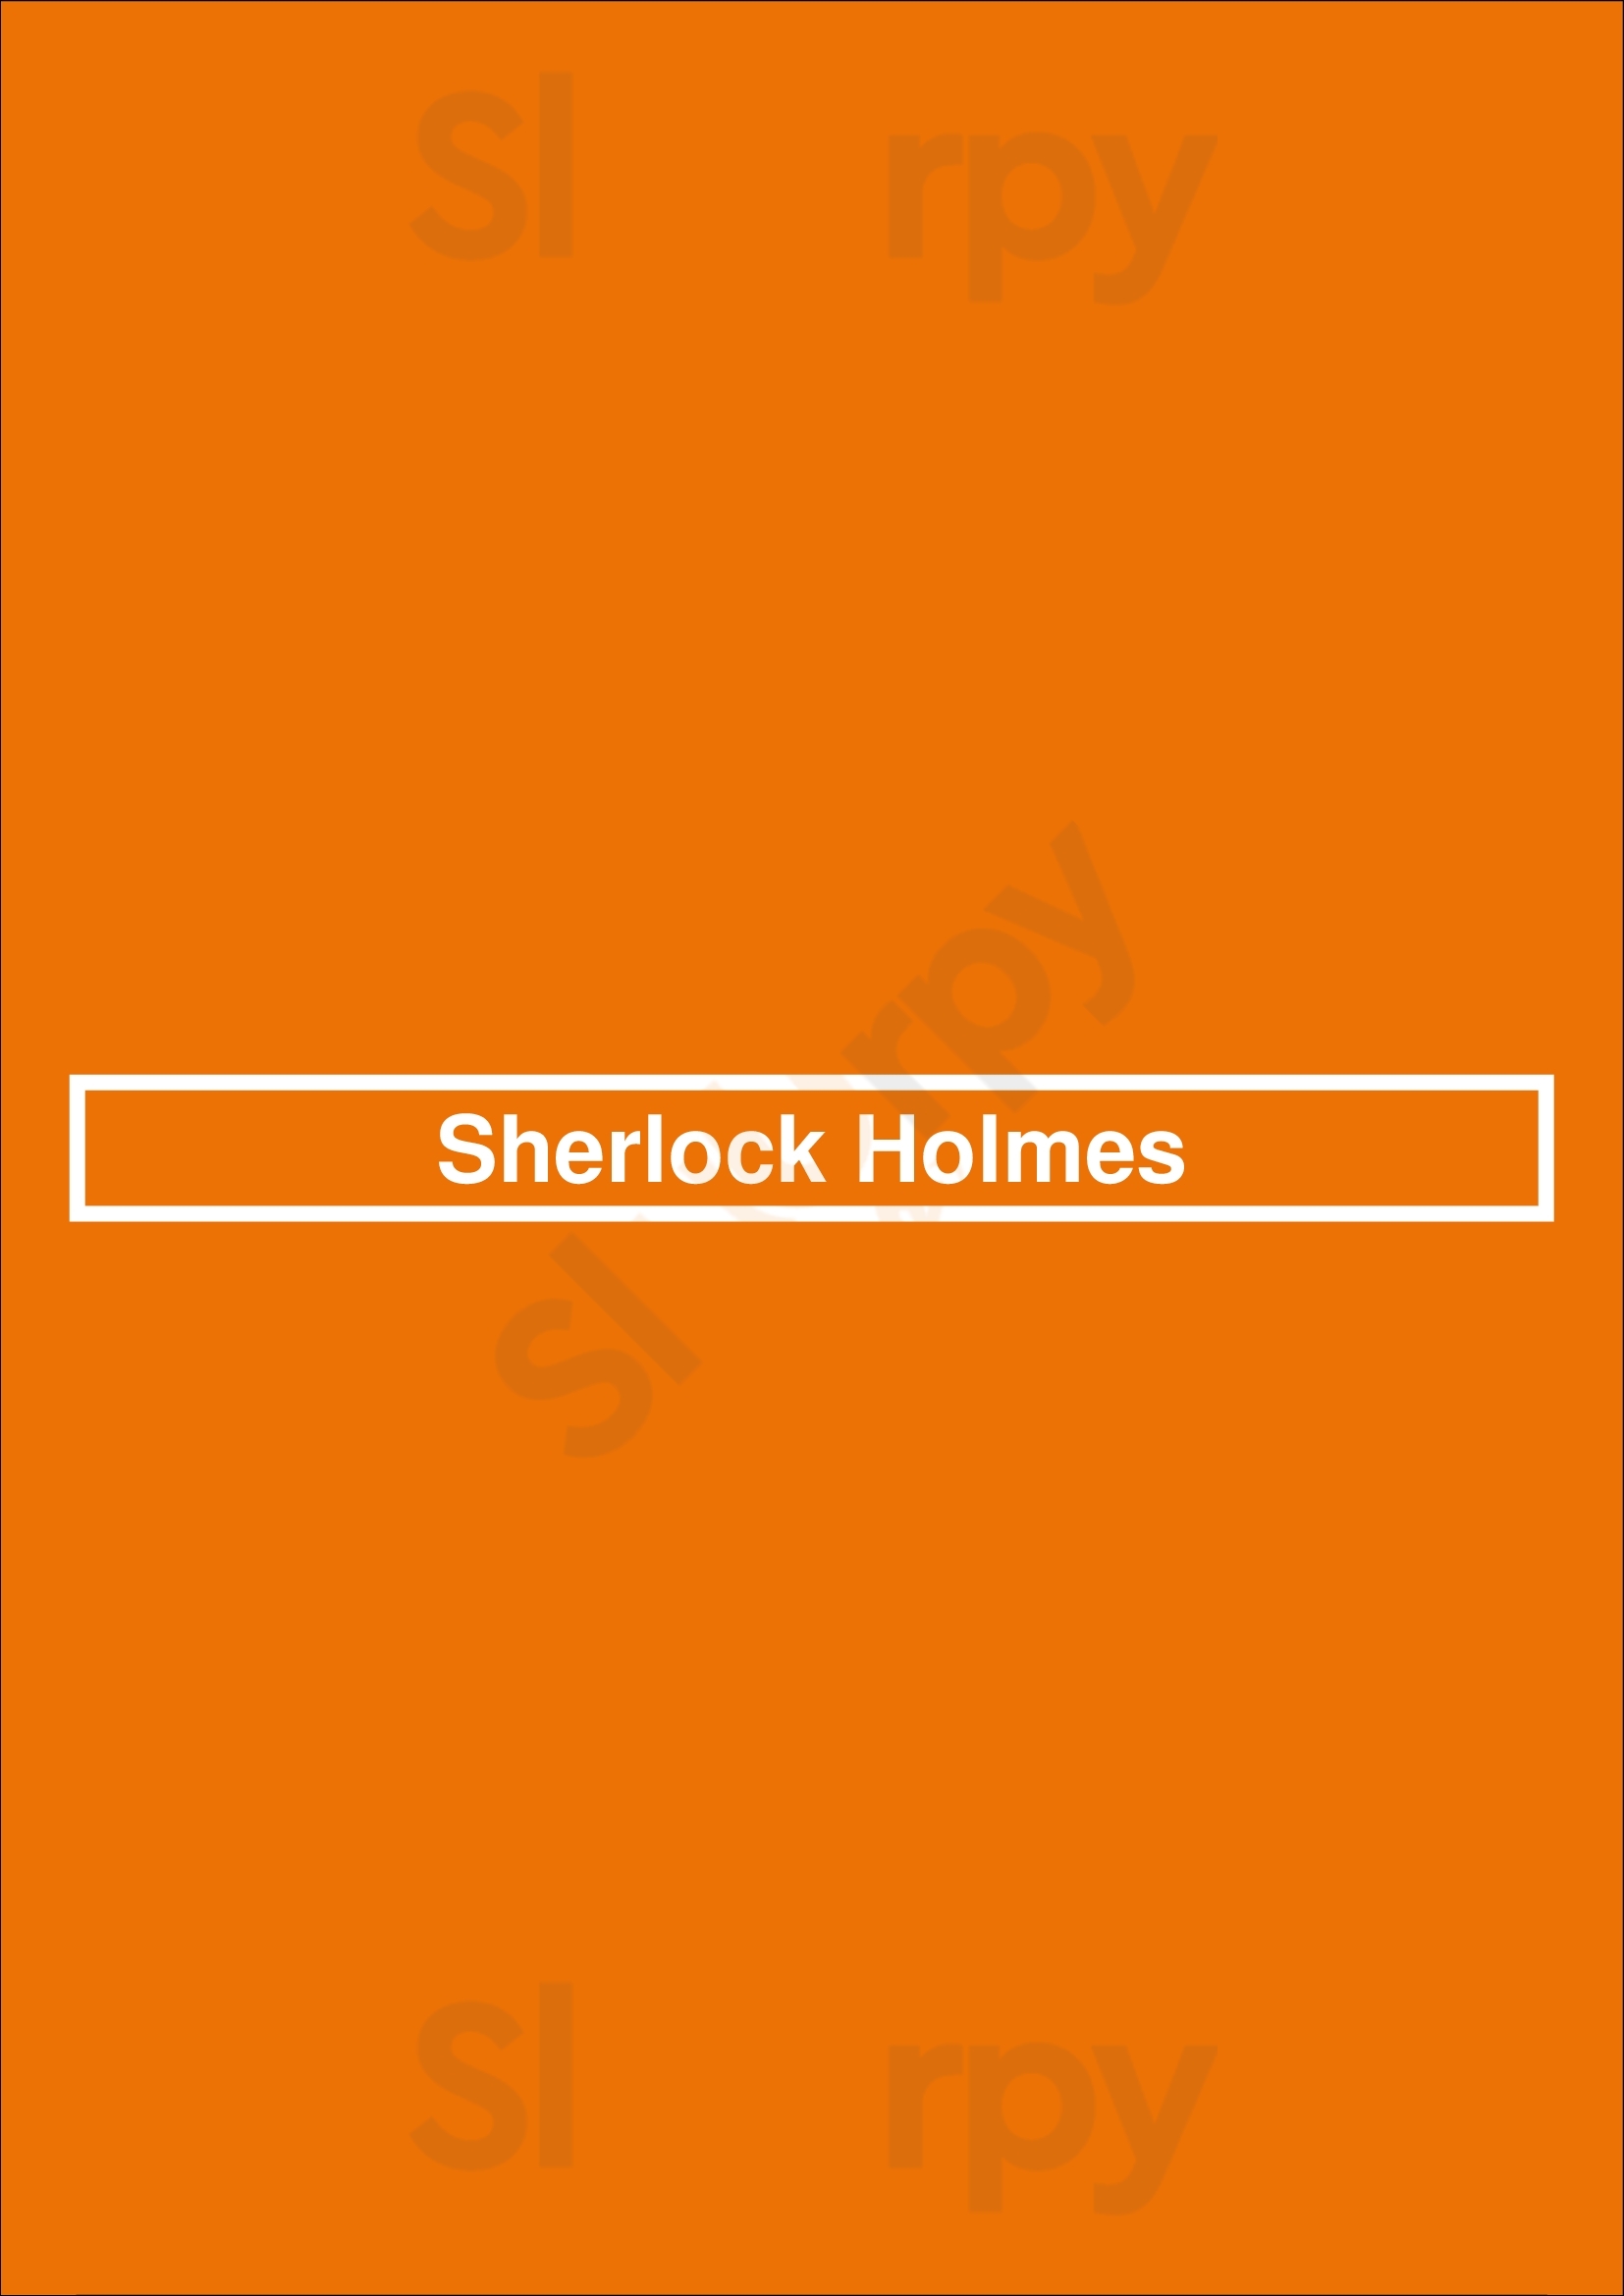 Sherlock Holmes Den Haag Menu - 1